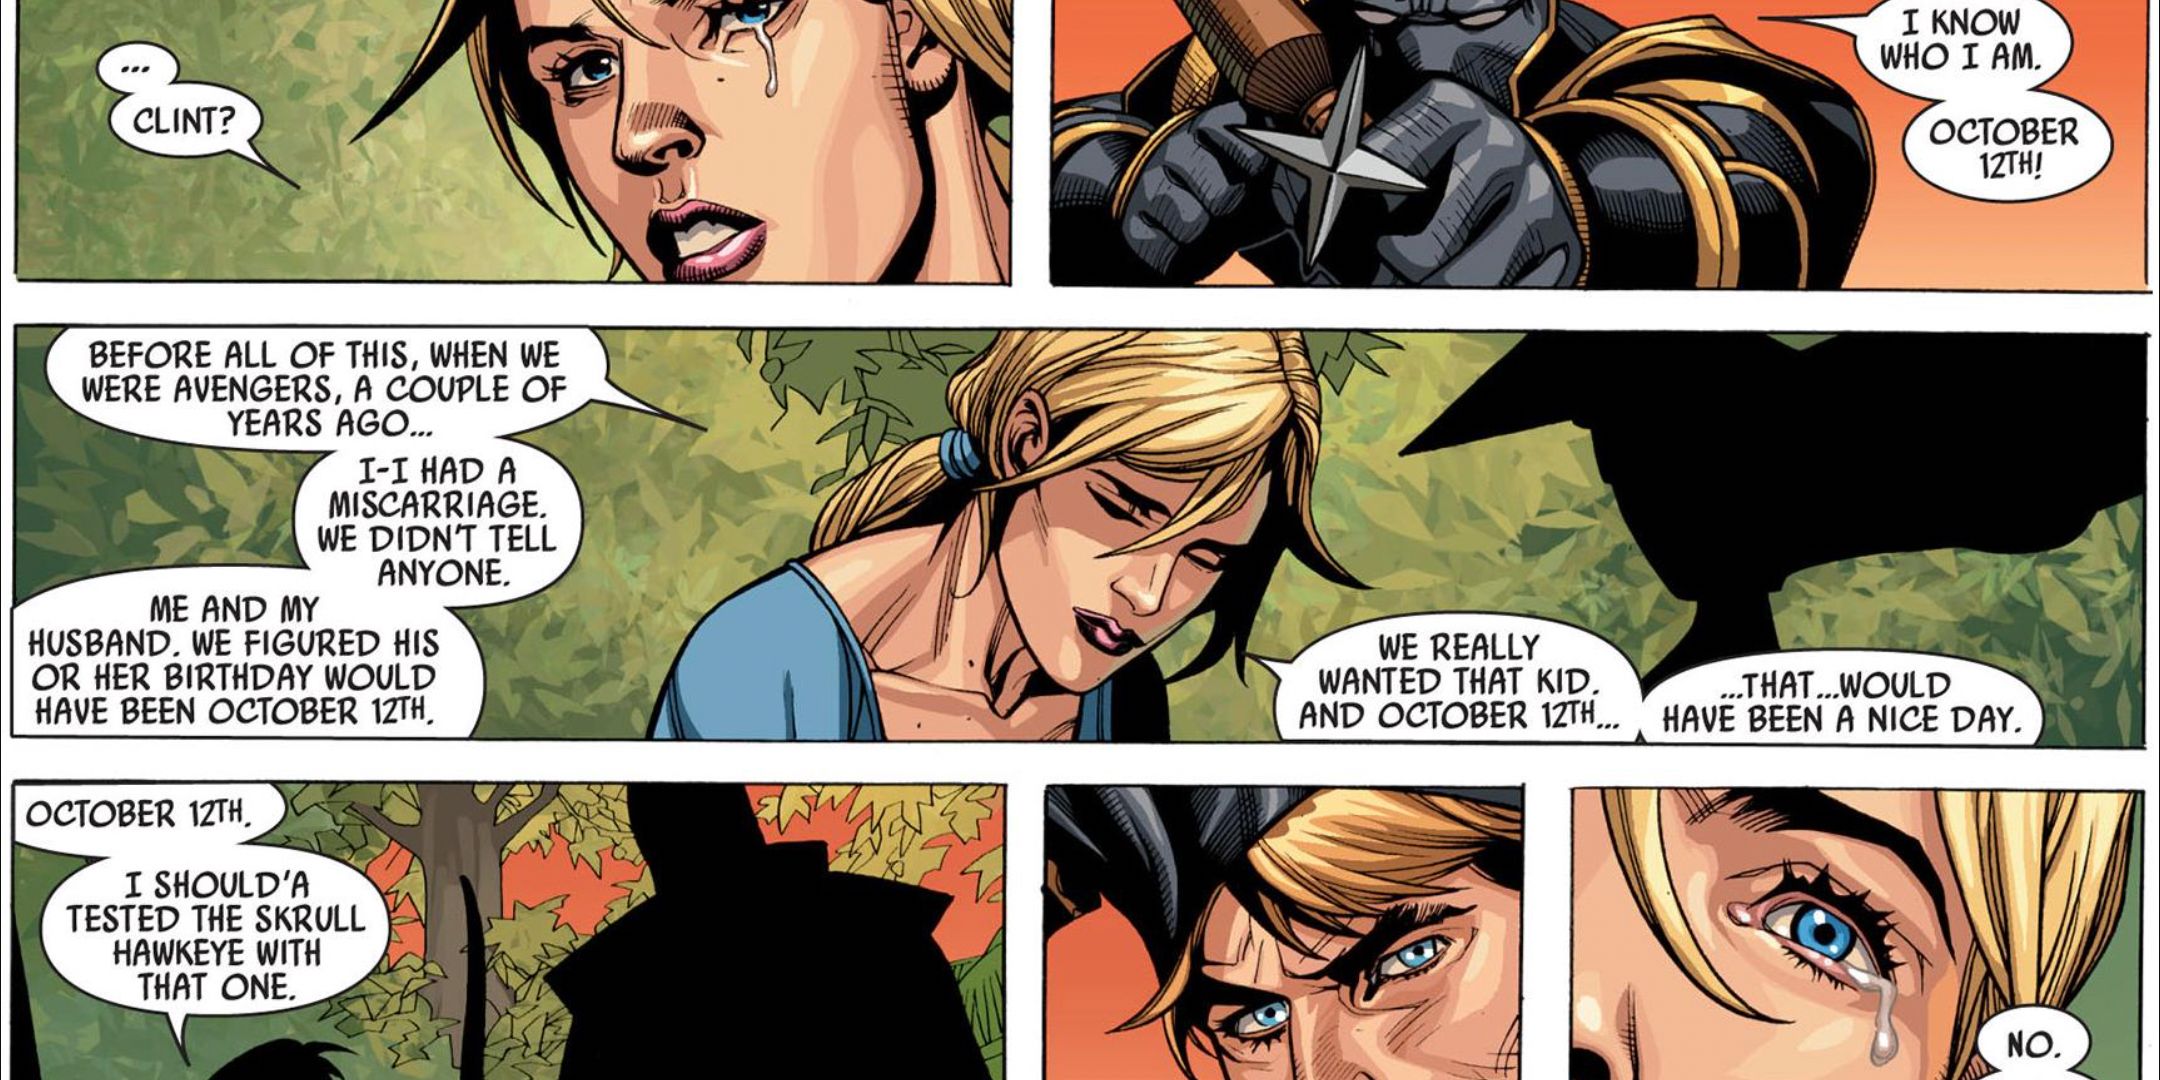 Clint Barton and Bobbi Morse reunite after she was taken by Skrulls in Marvel Comics